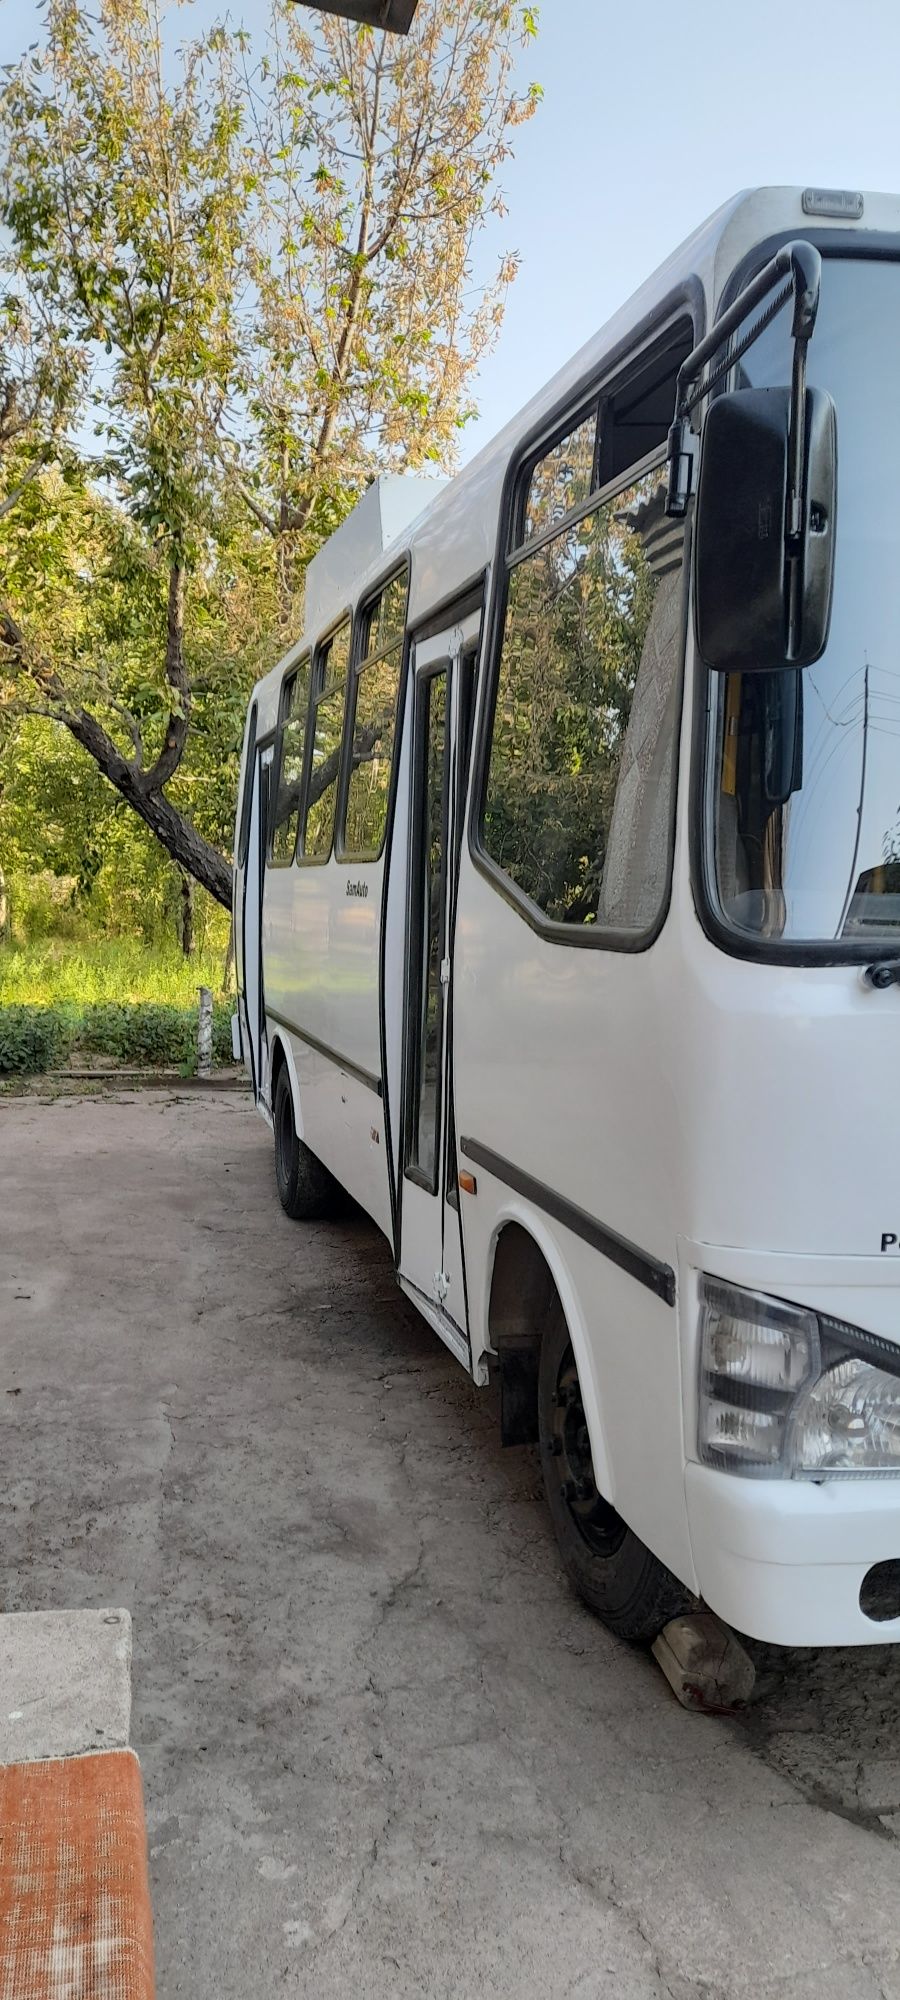 Продается Автобус Исузи  мр37  2012 года  на Метане